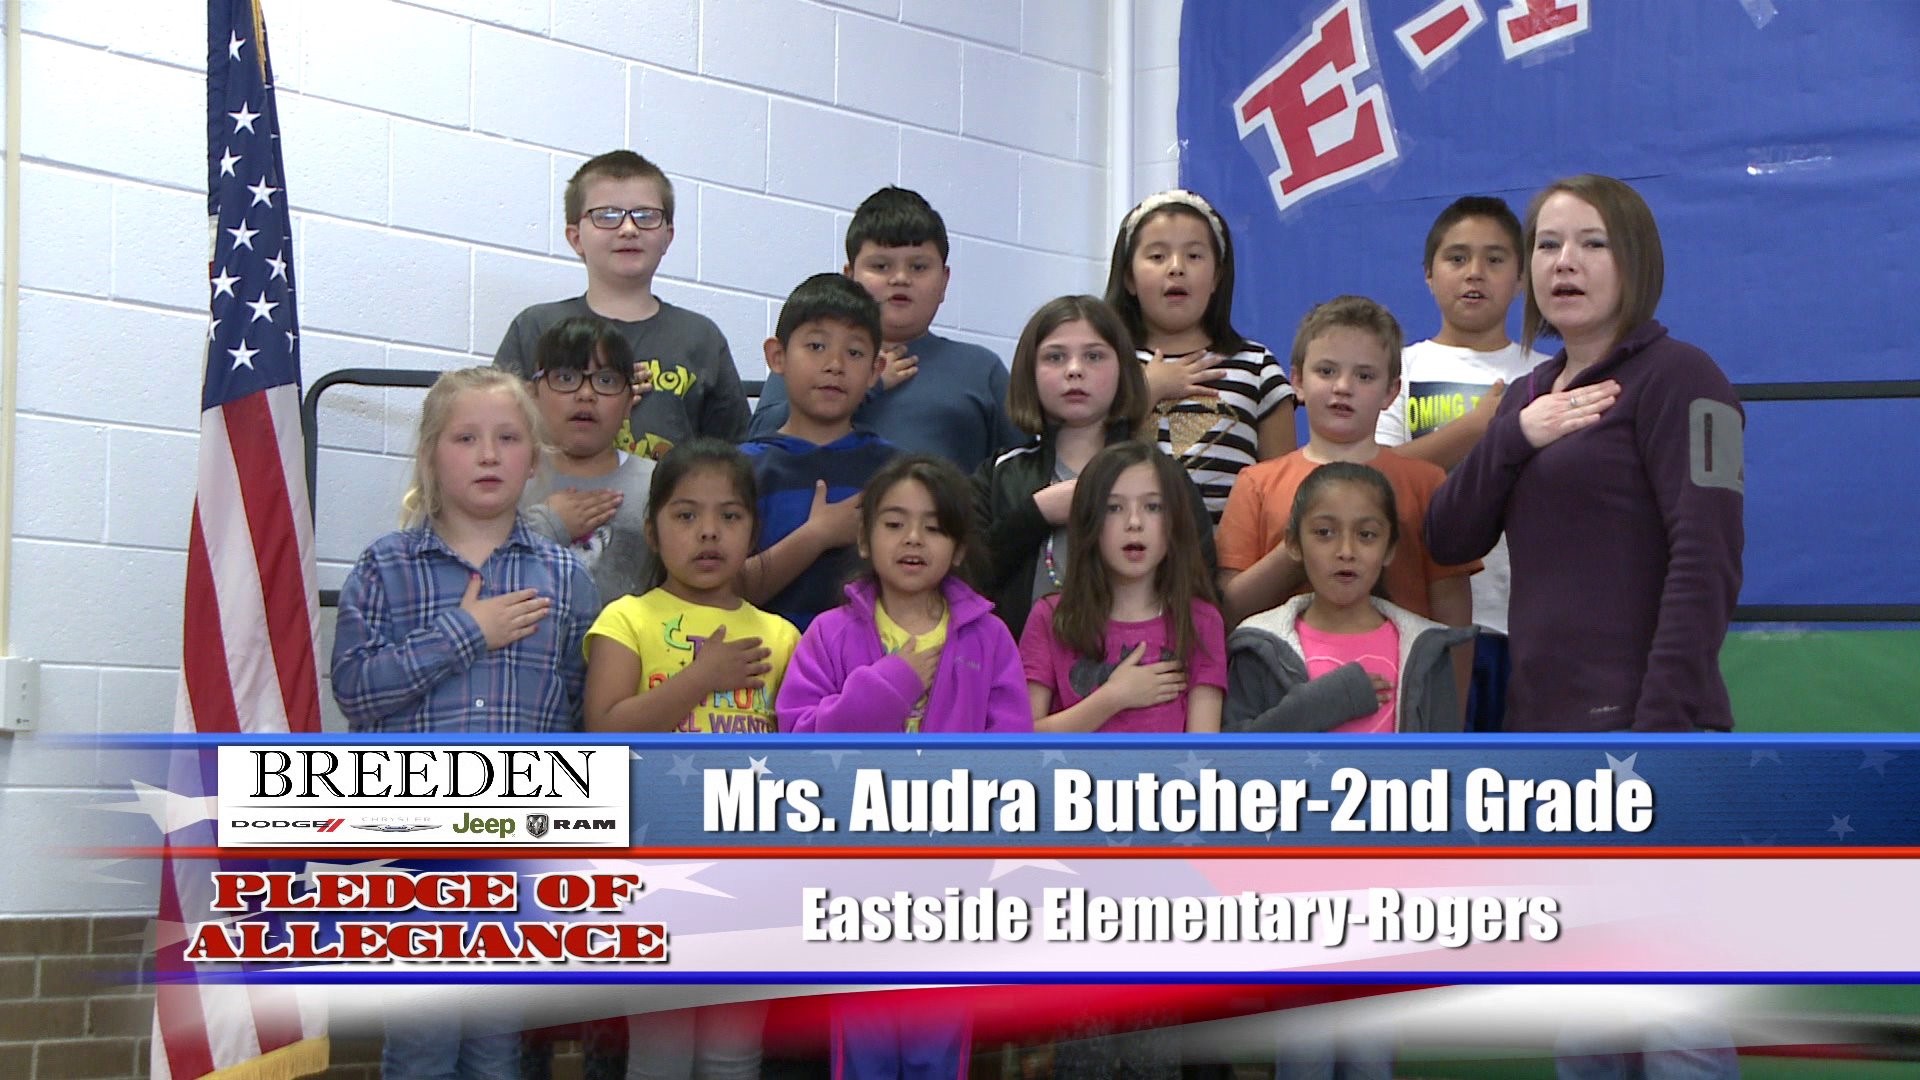 Ms. Butcher 2nd Grade Eastside Elementary